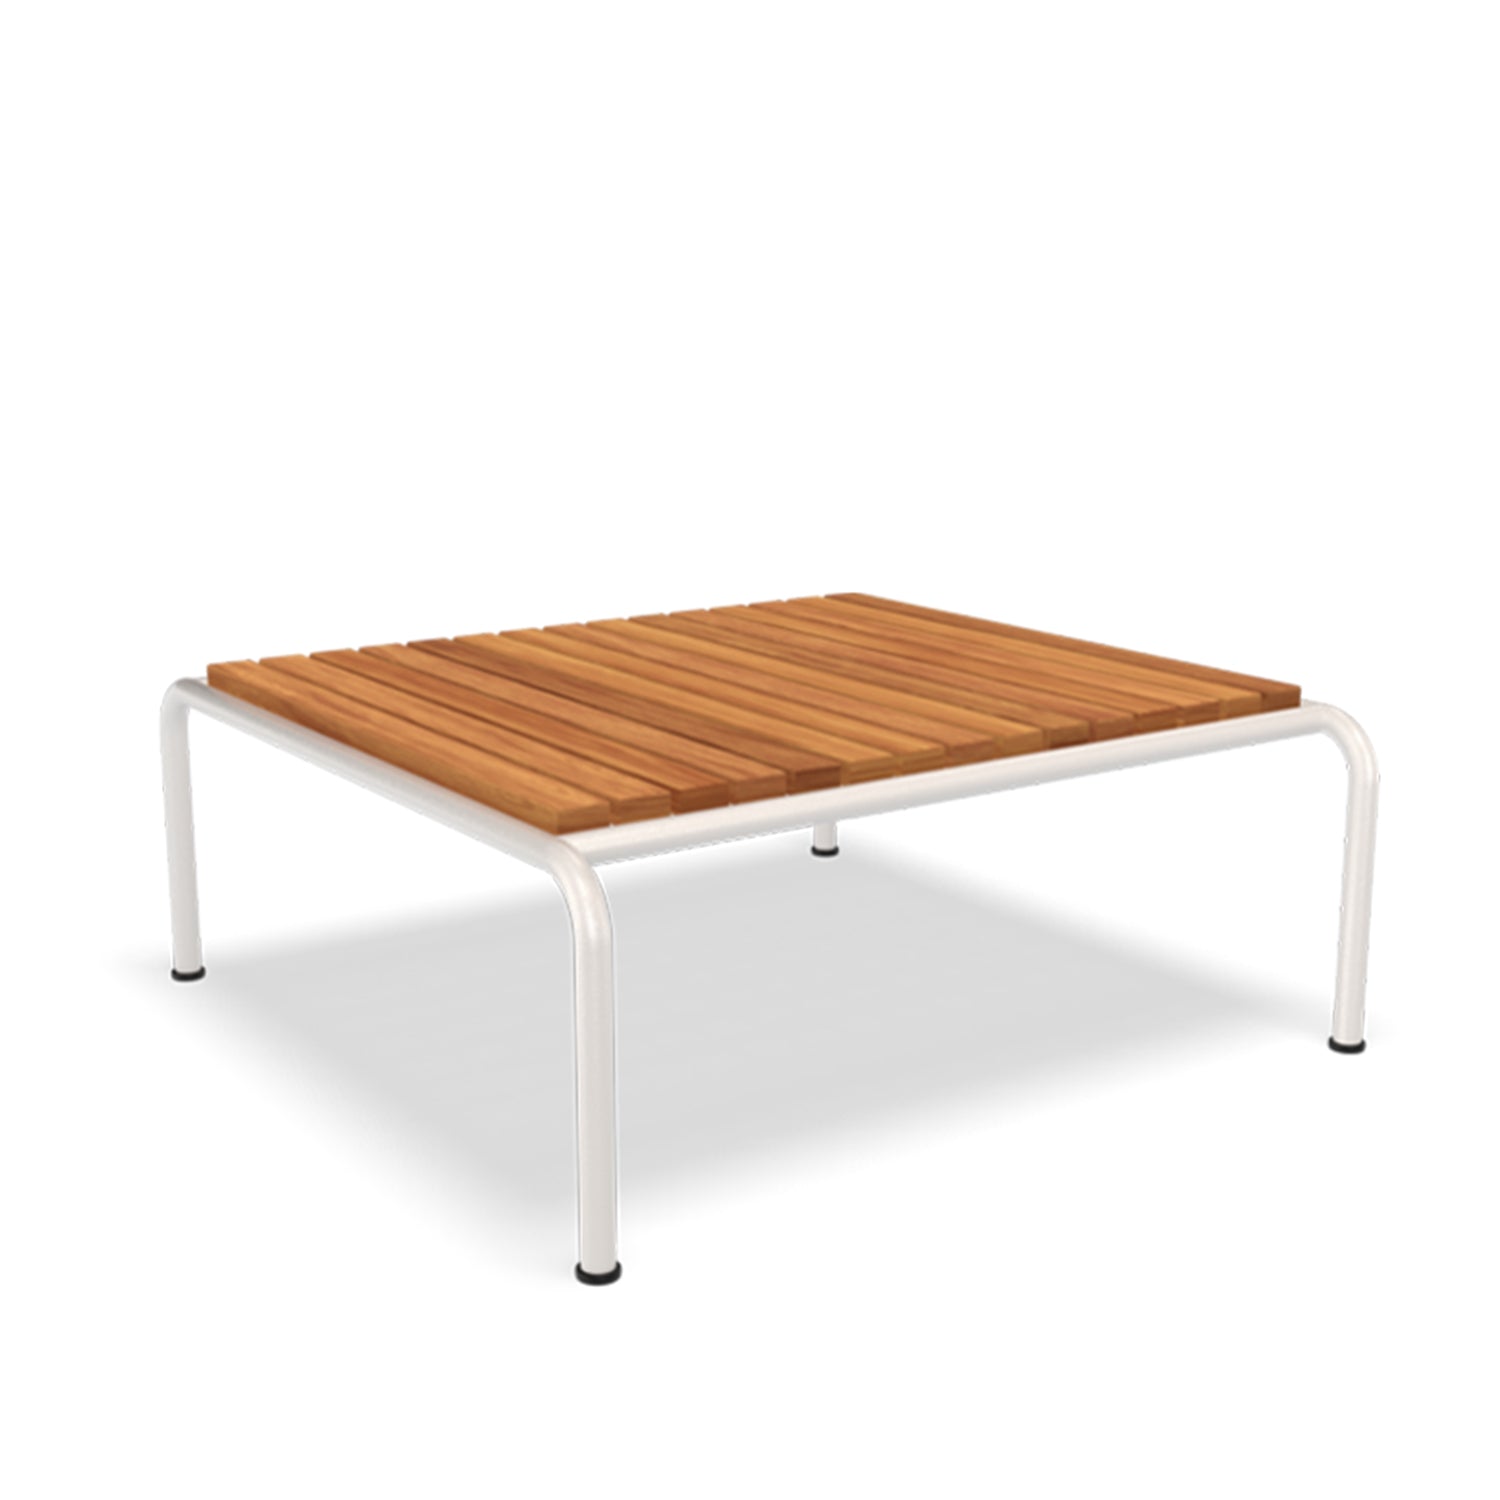 Avon Table - The Design Choice